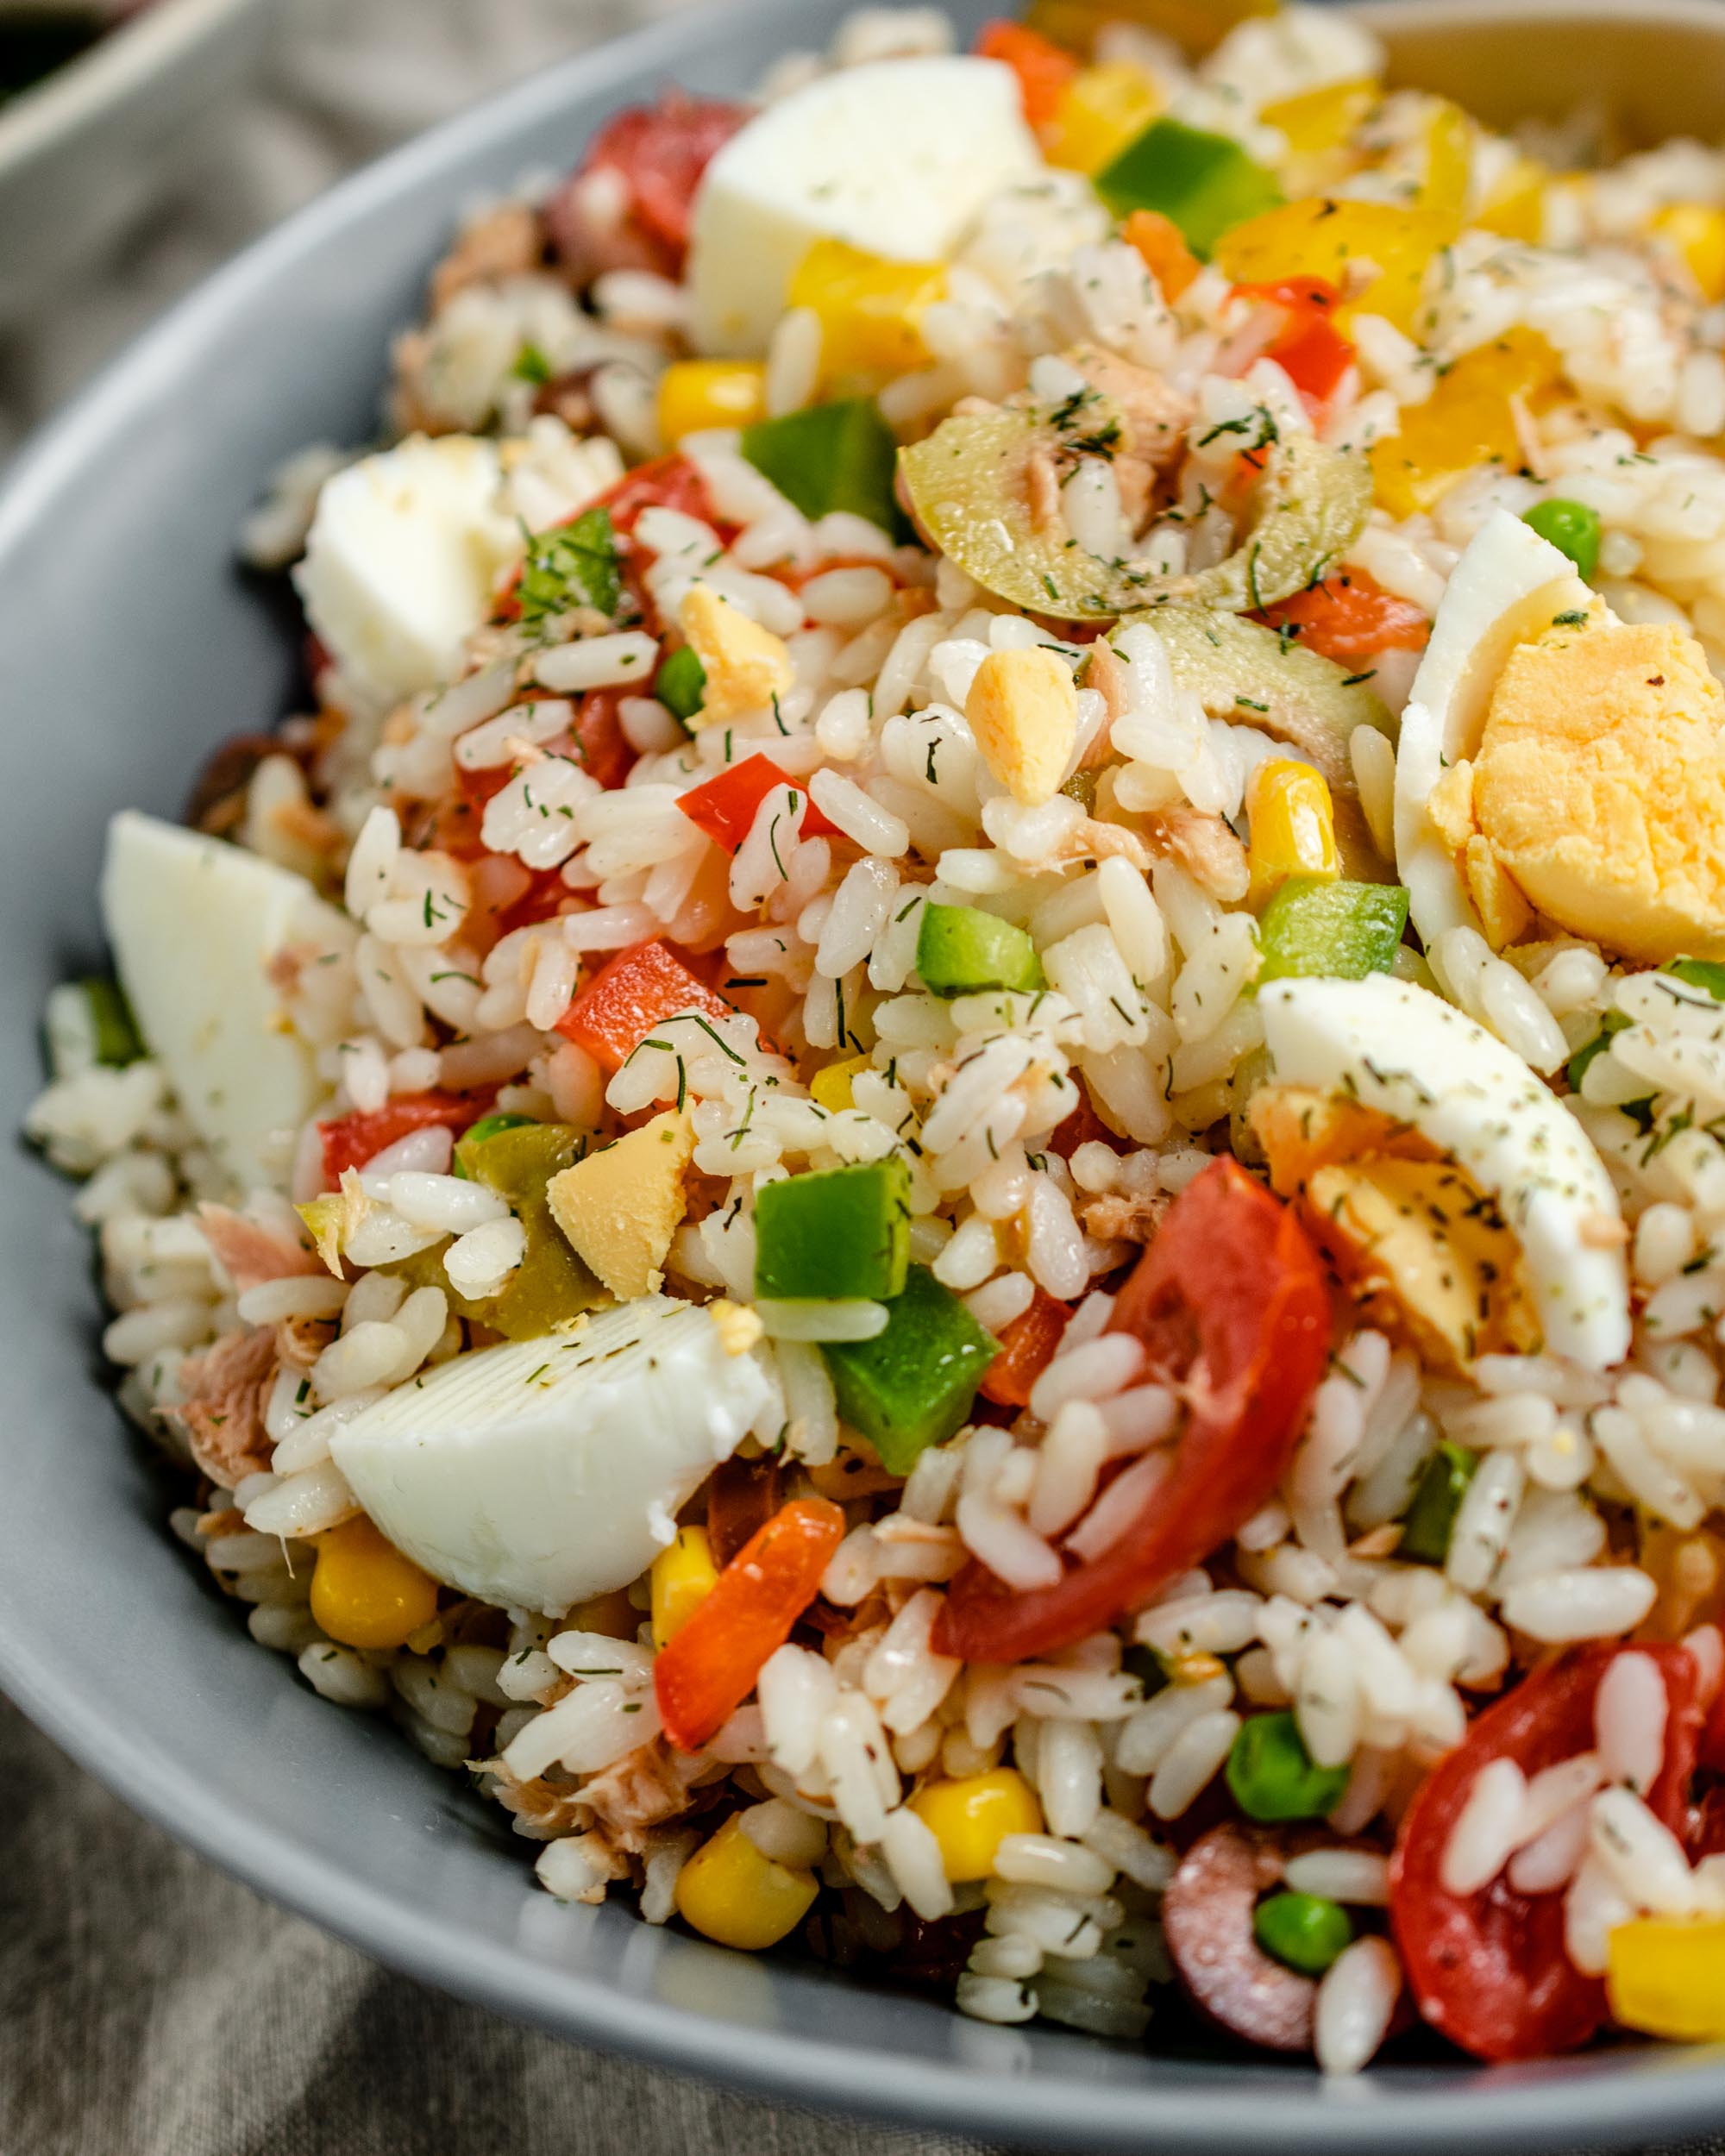 Tuna and rice salad bowl recipe